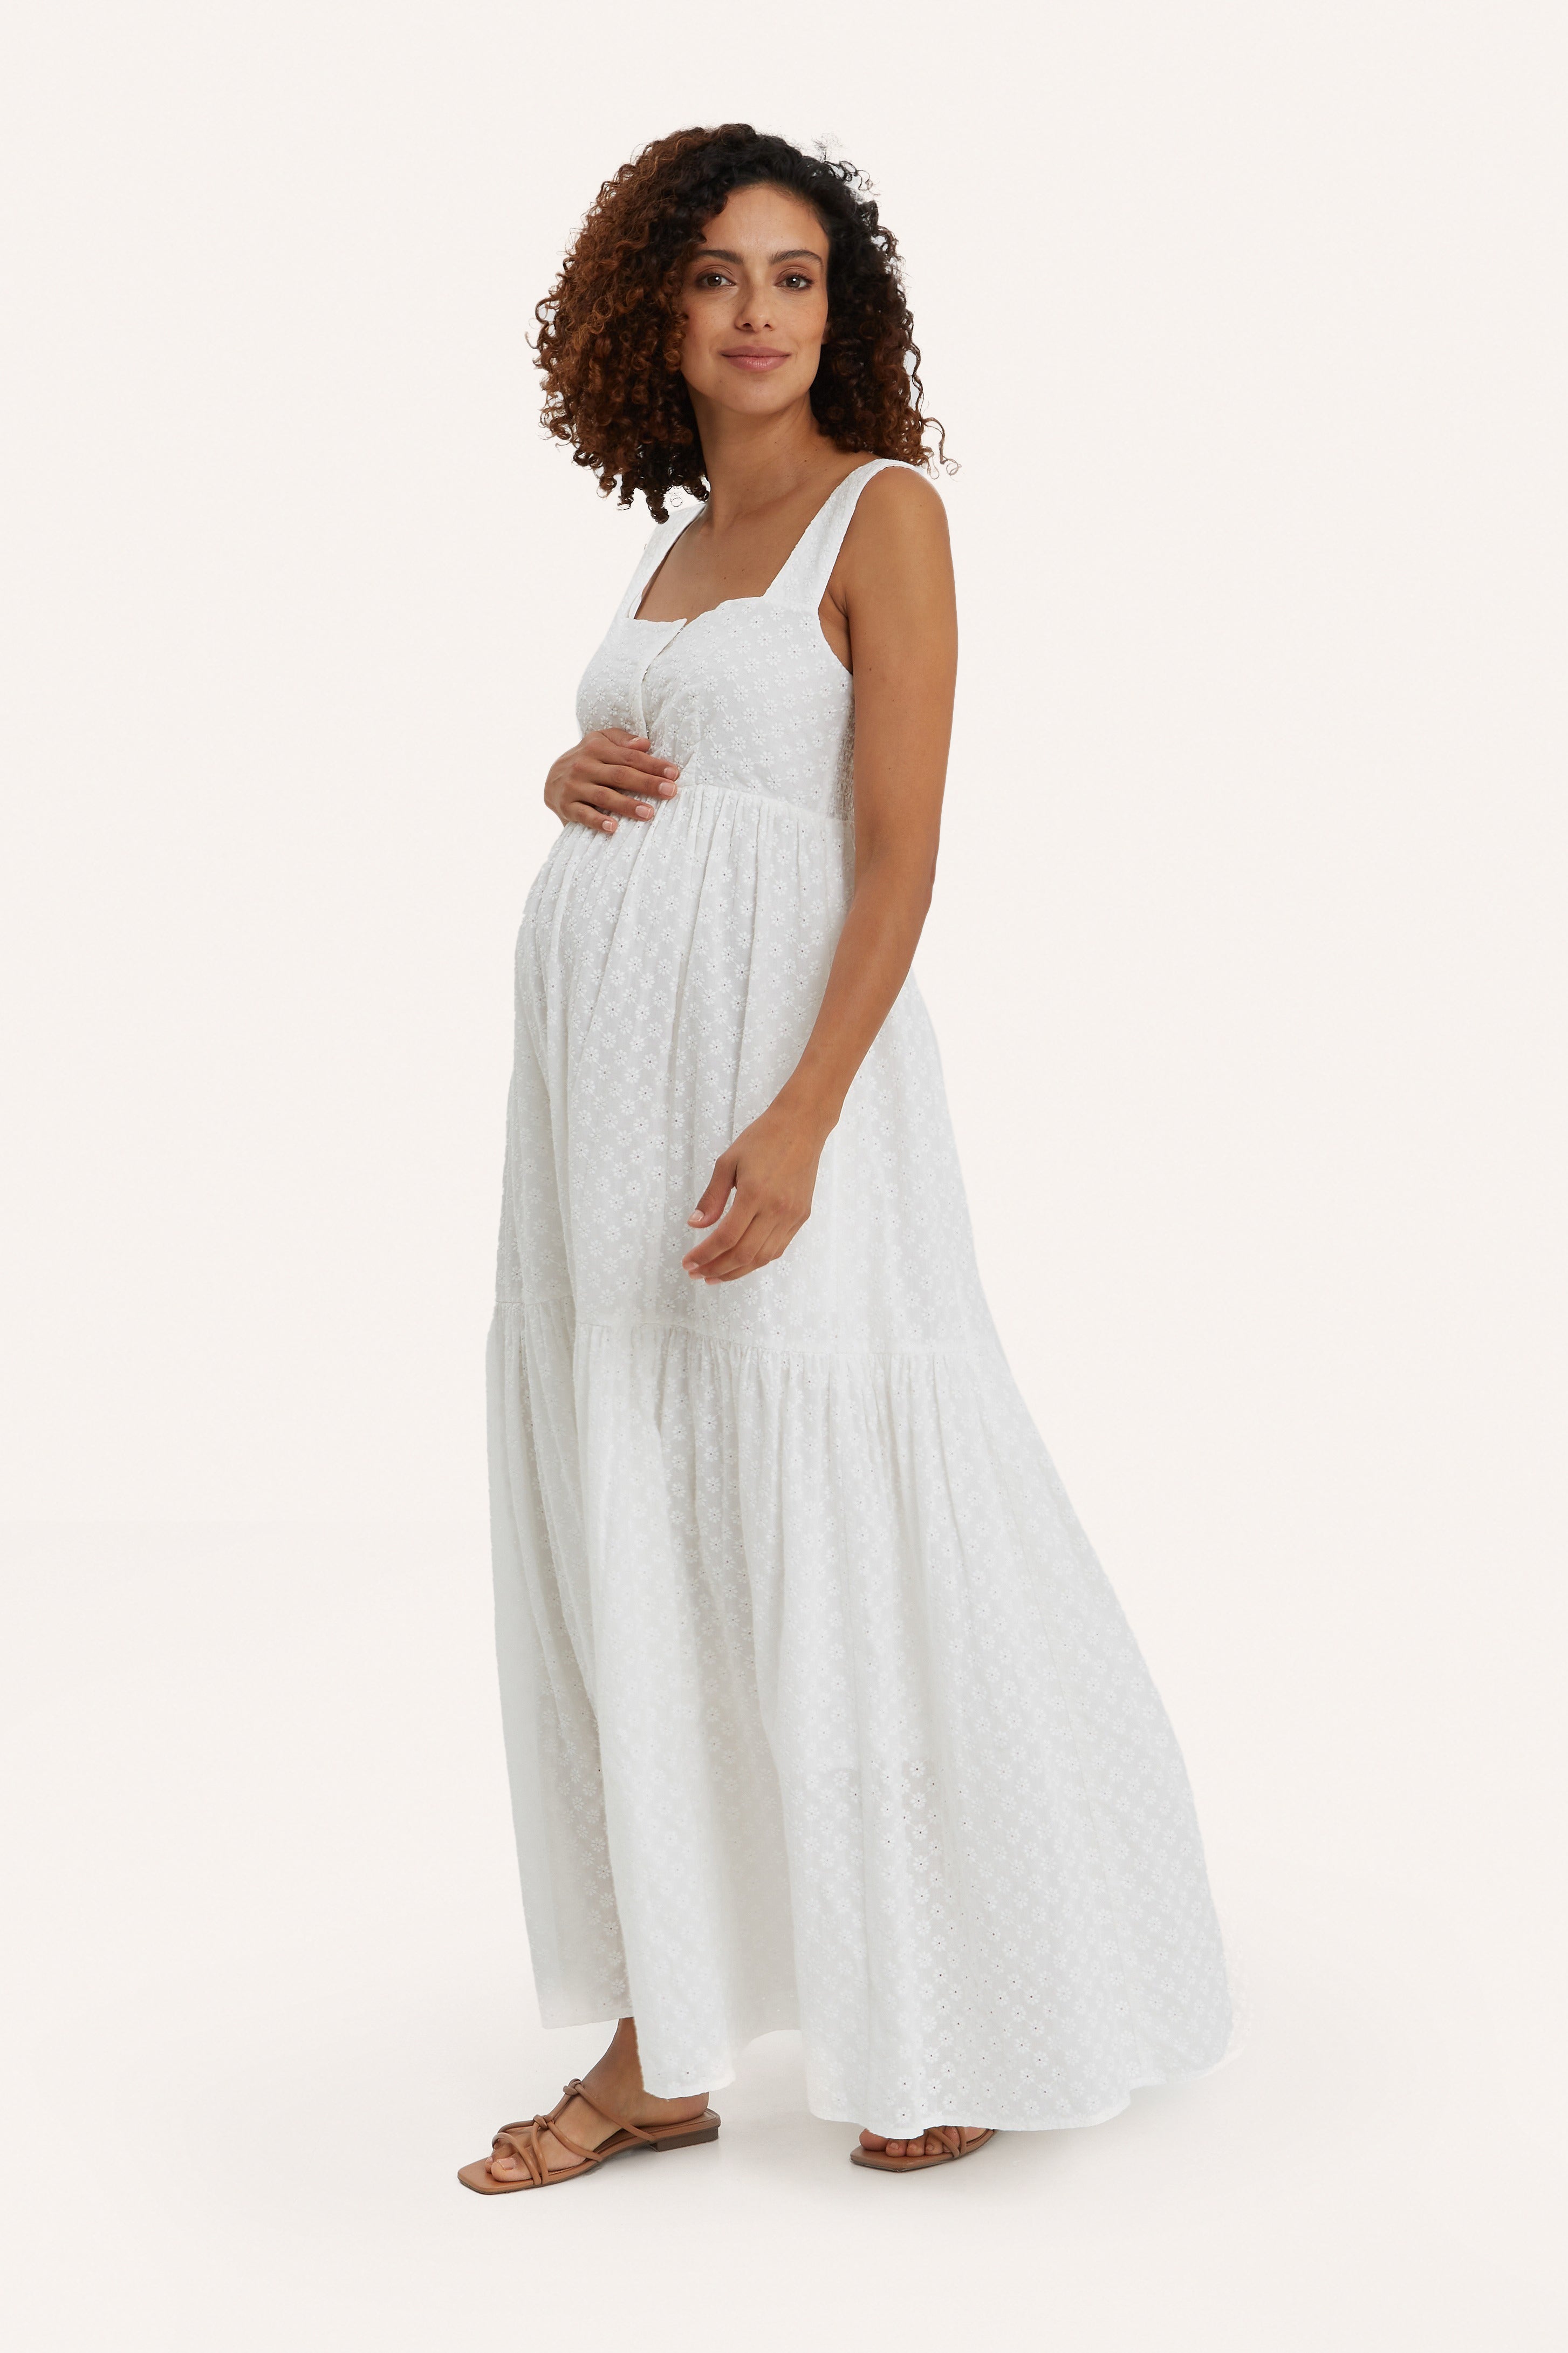 Champagne Ripe Maternity Alexis Satin Dress (Like New - Size Medium) -  Motherhood Closet - Maternity Consignment